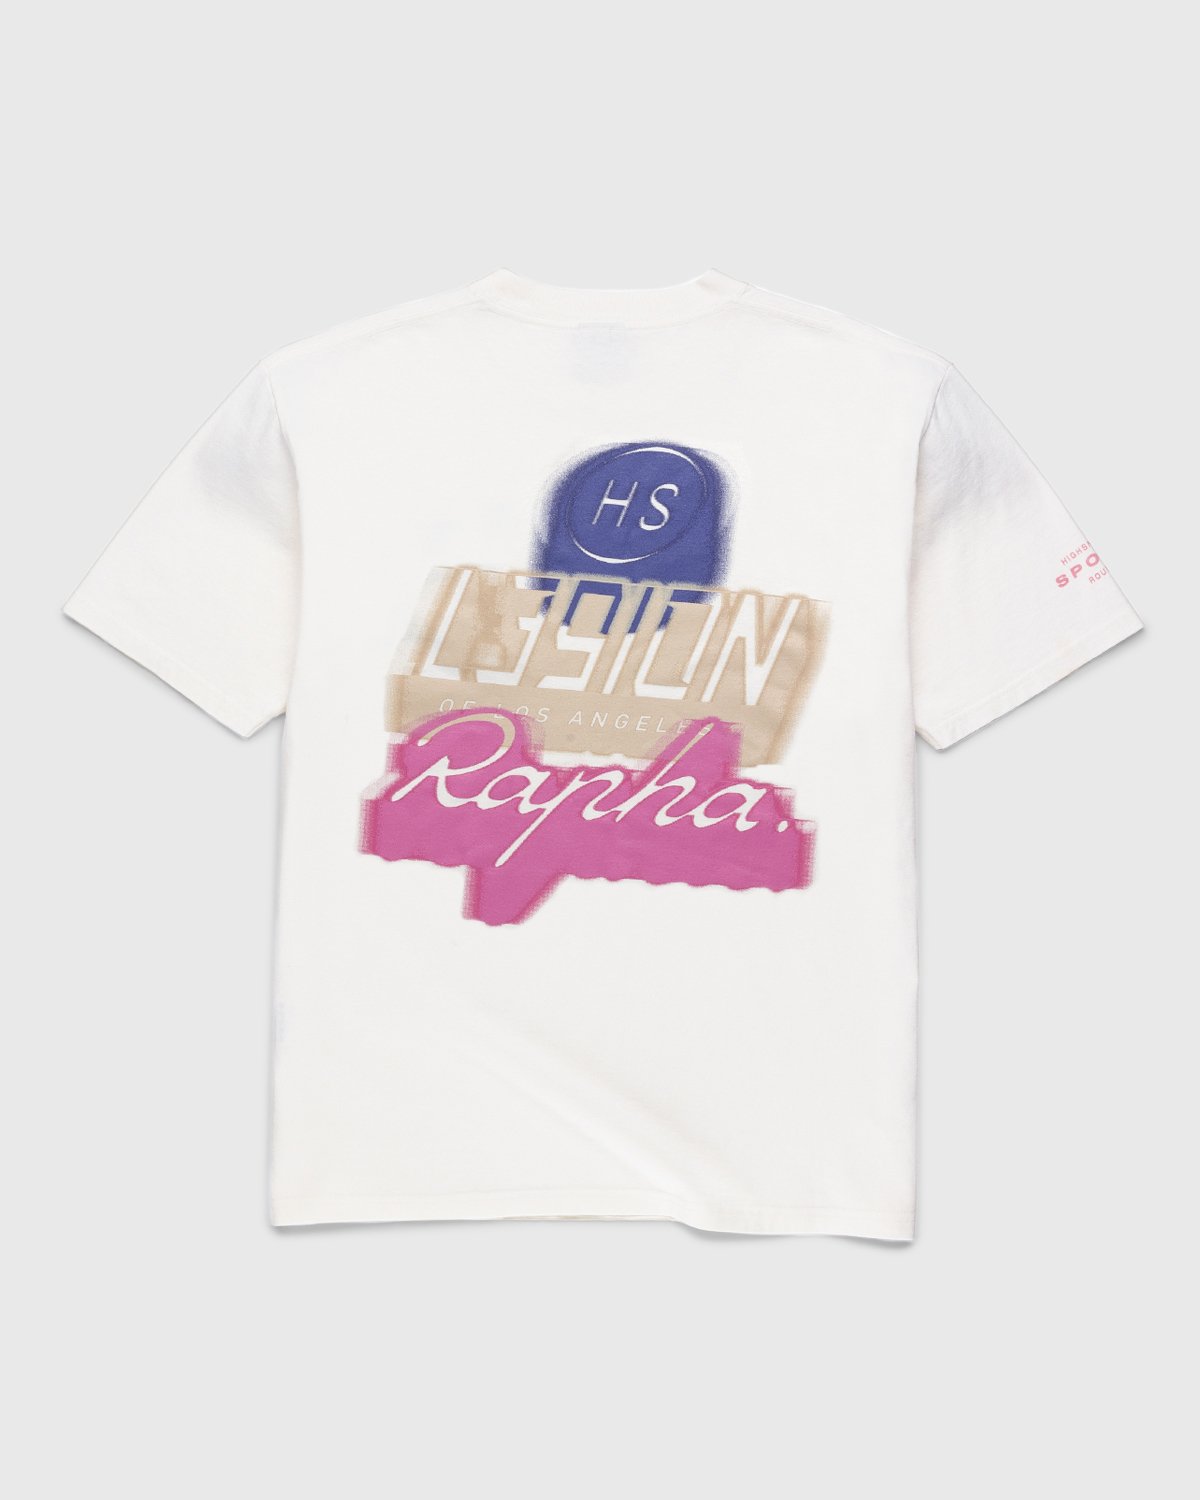 Rapha x L39ION of LA x Highsnobiety - HS Sports T-Shirt White - Clothing - White - Image 1